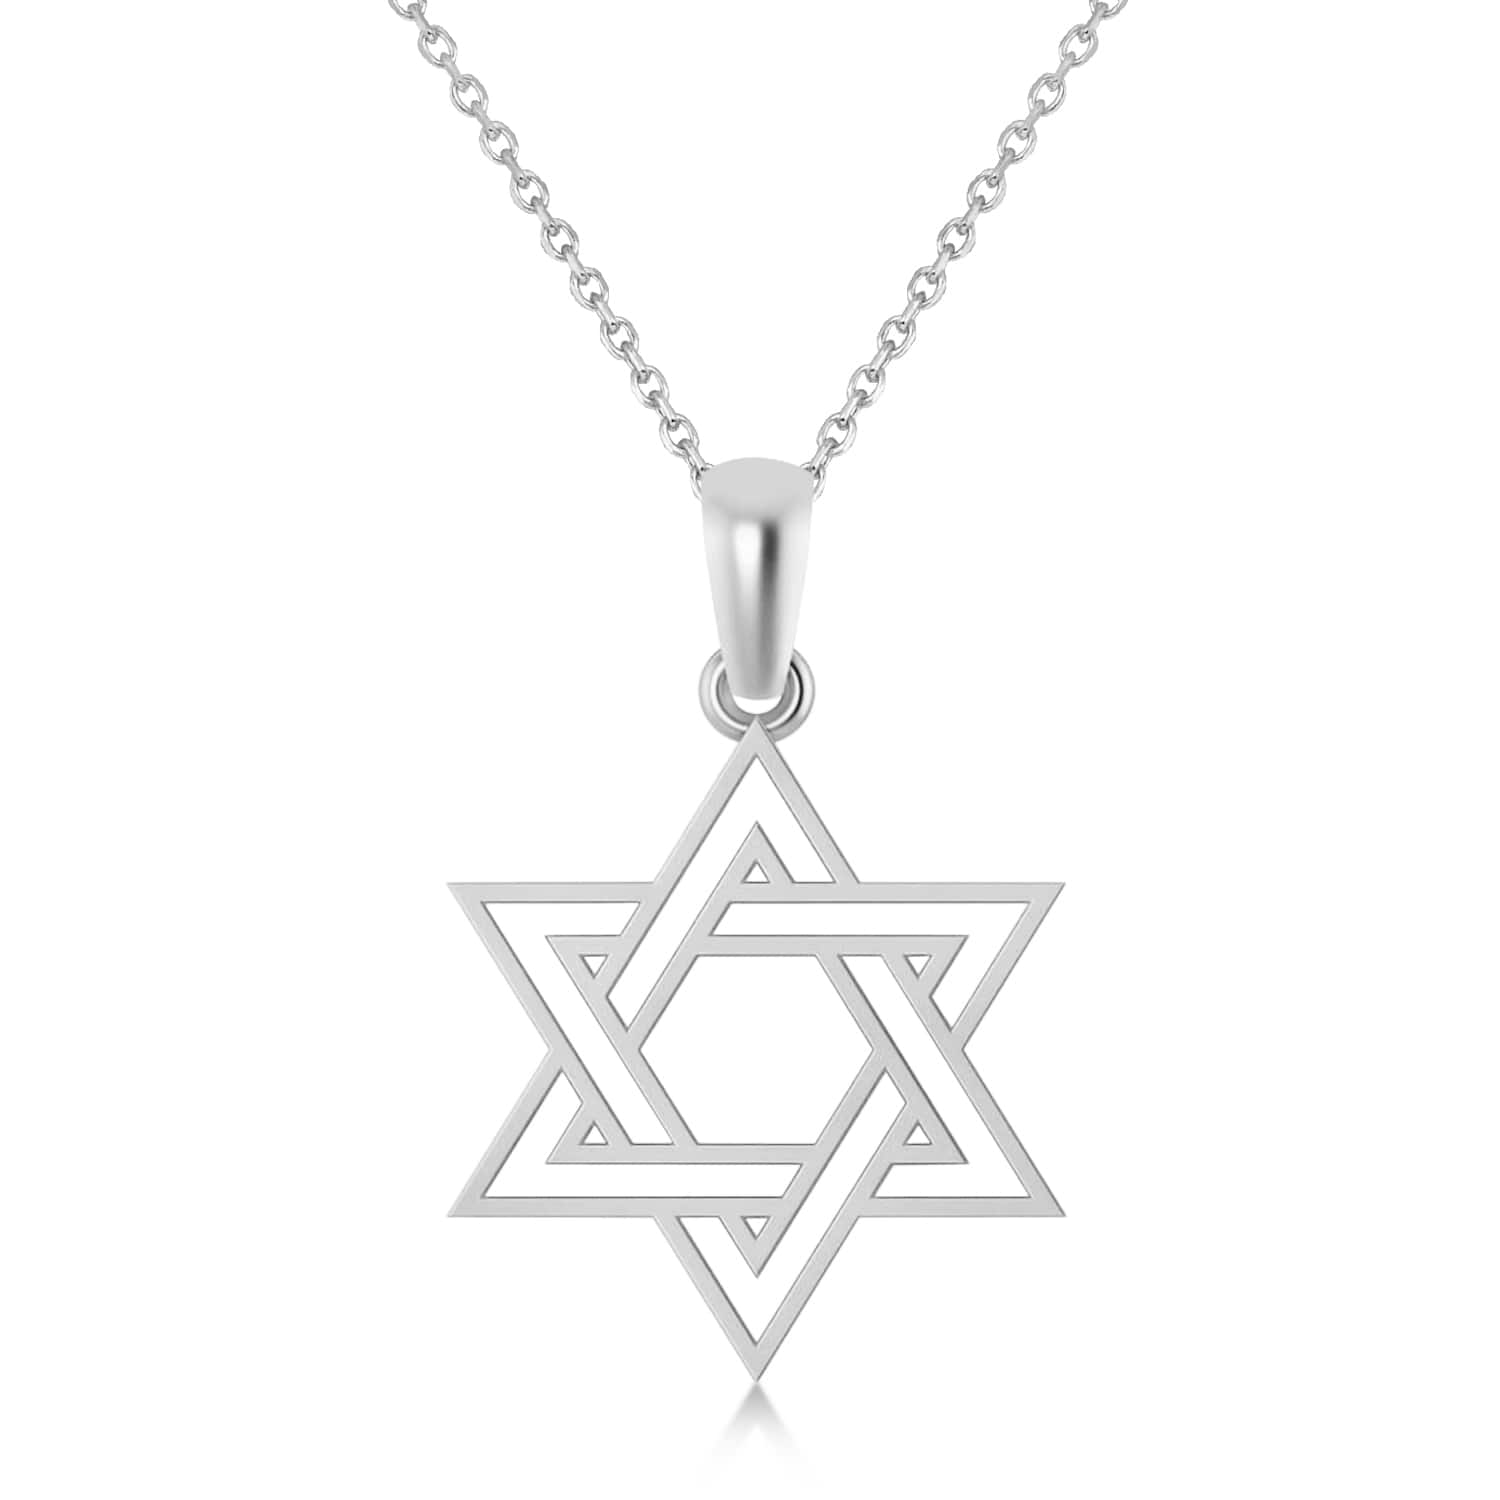 Jewish Star of David Pendant Necklace 14k White Gold